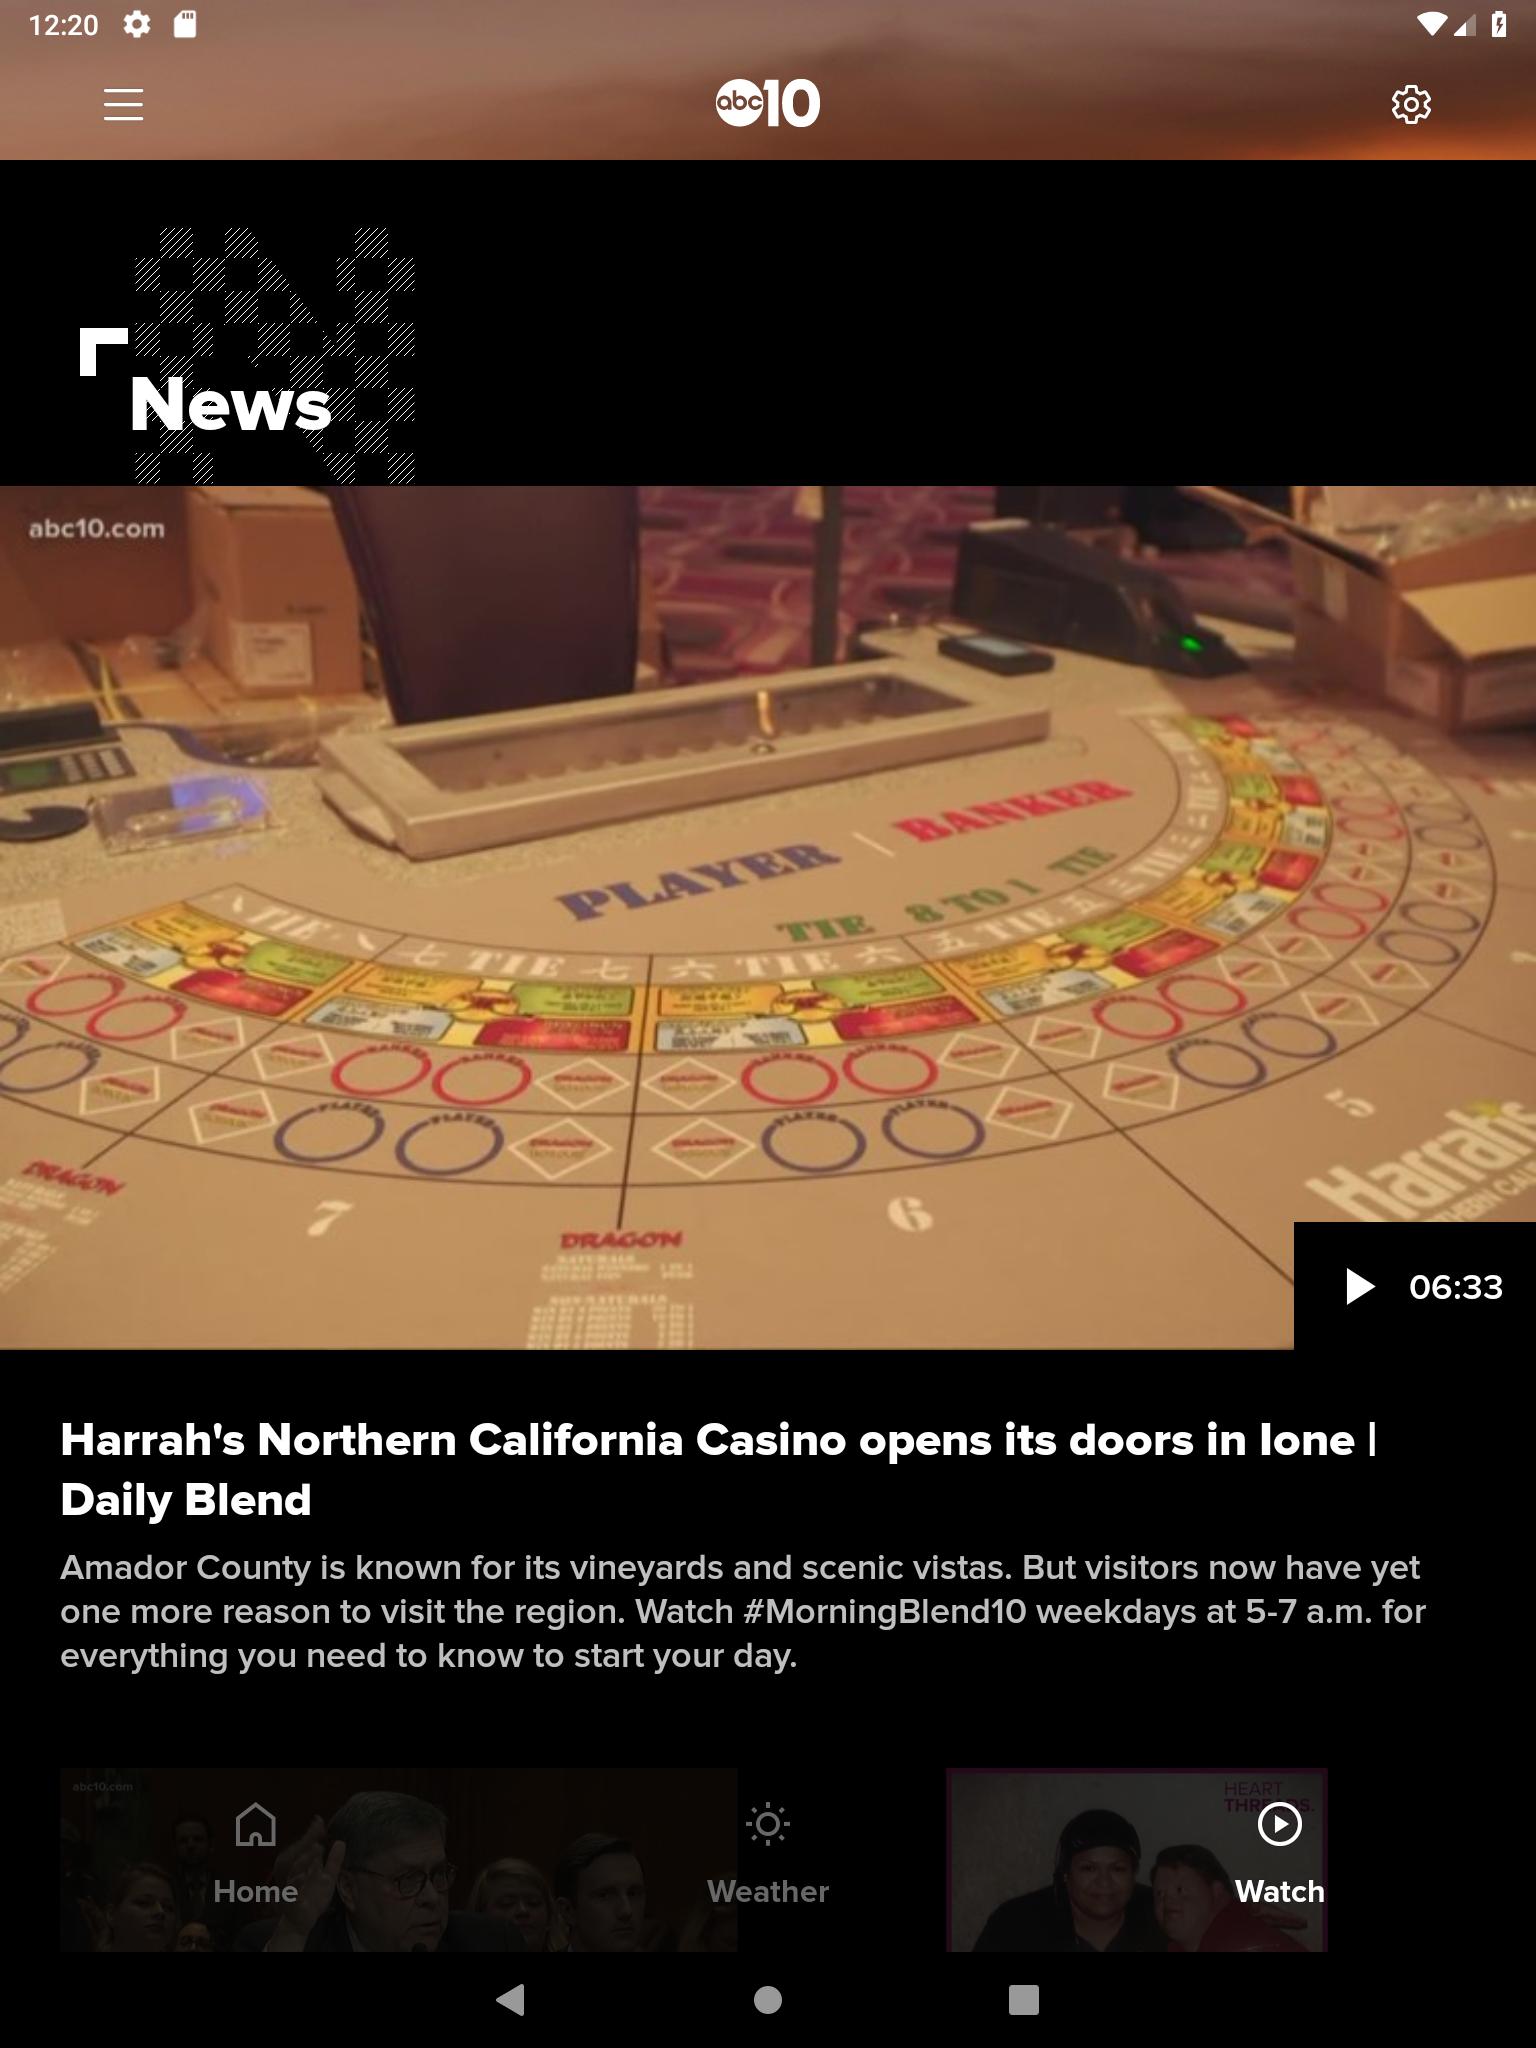 Northern California News from ABC10 43.2.41 Screenshot 7